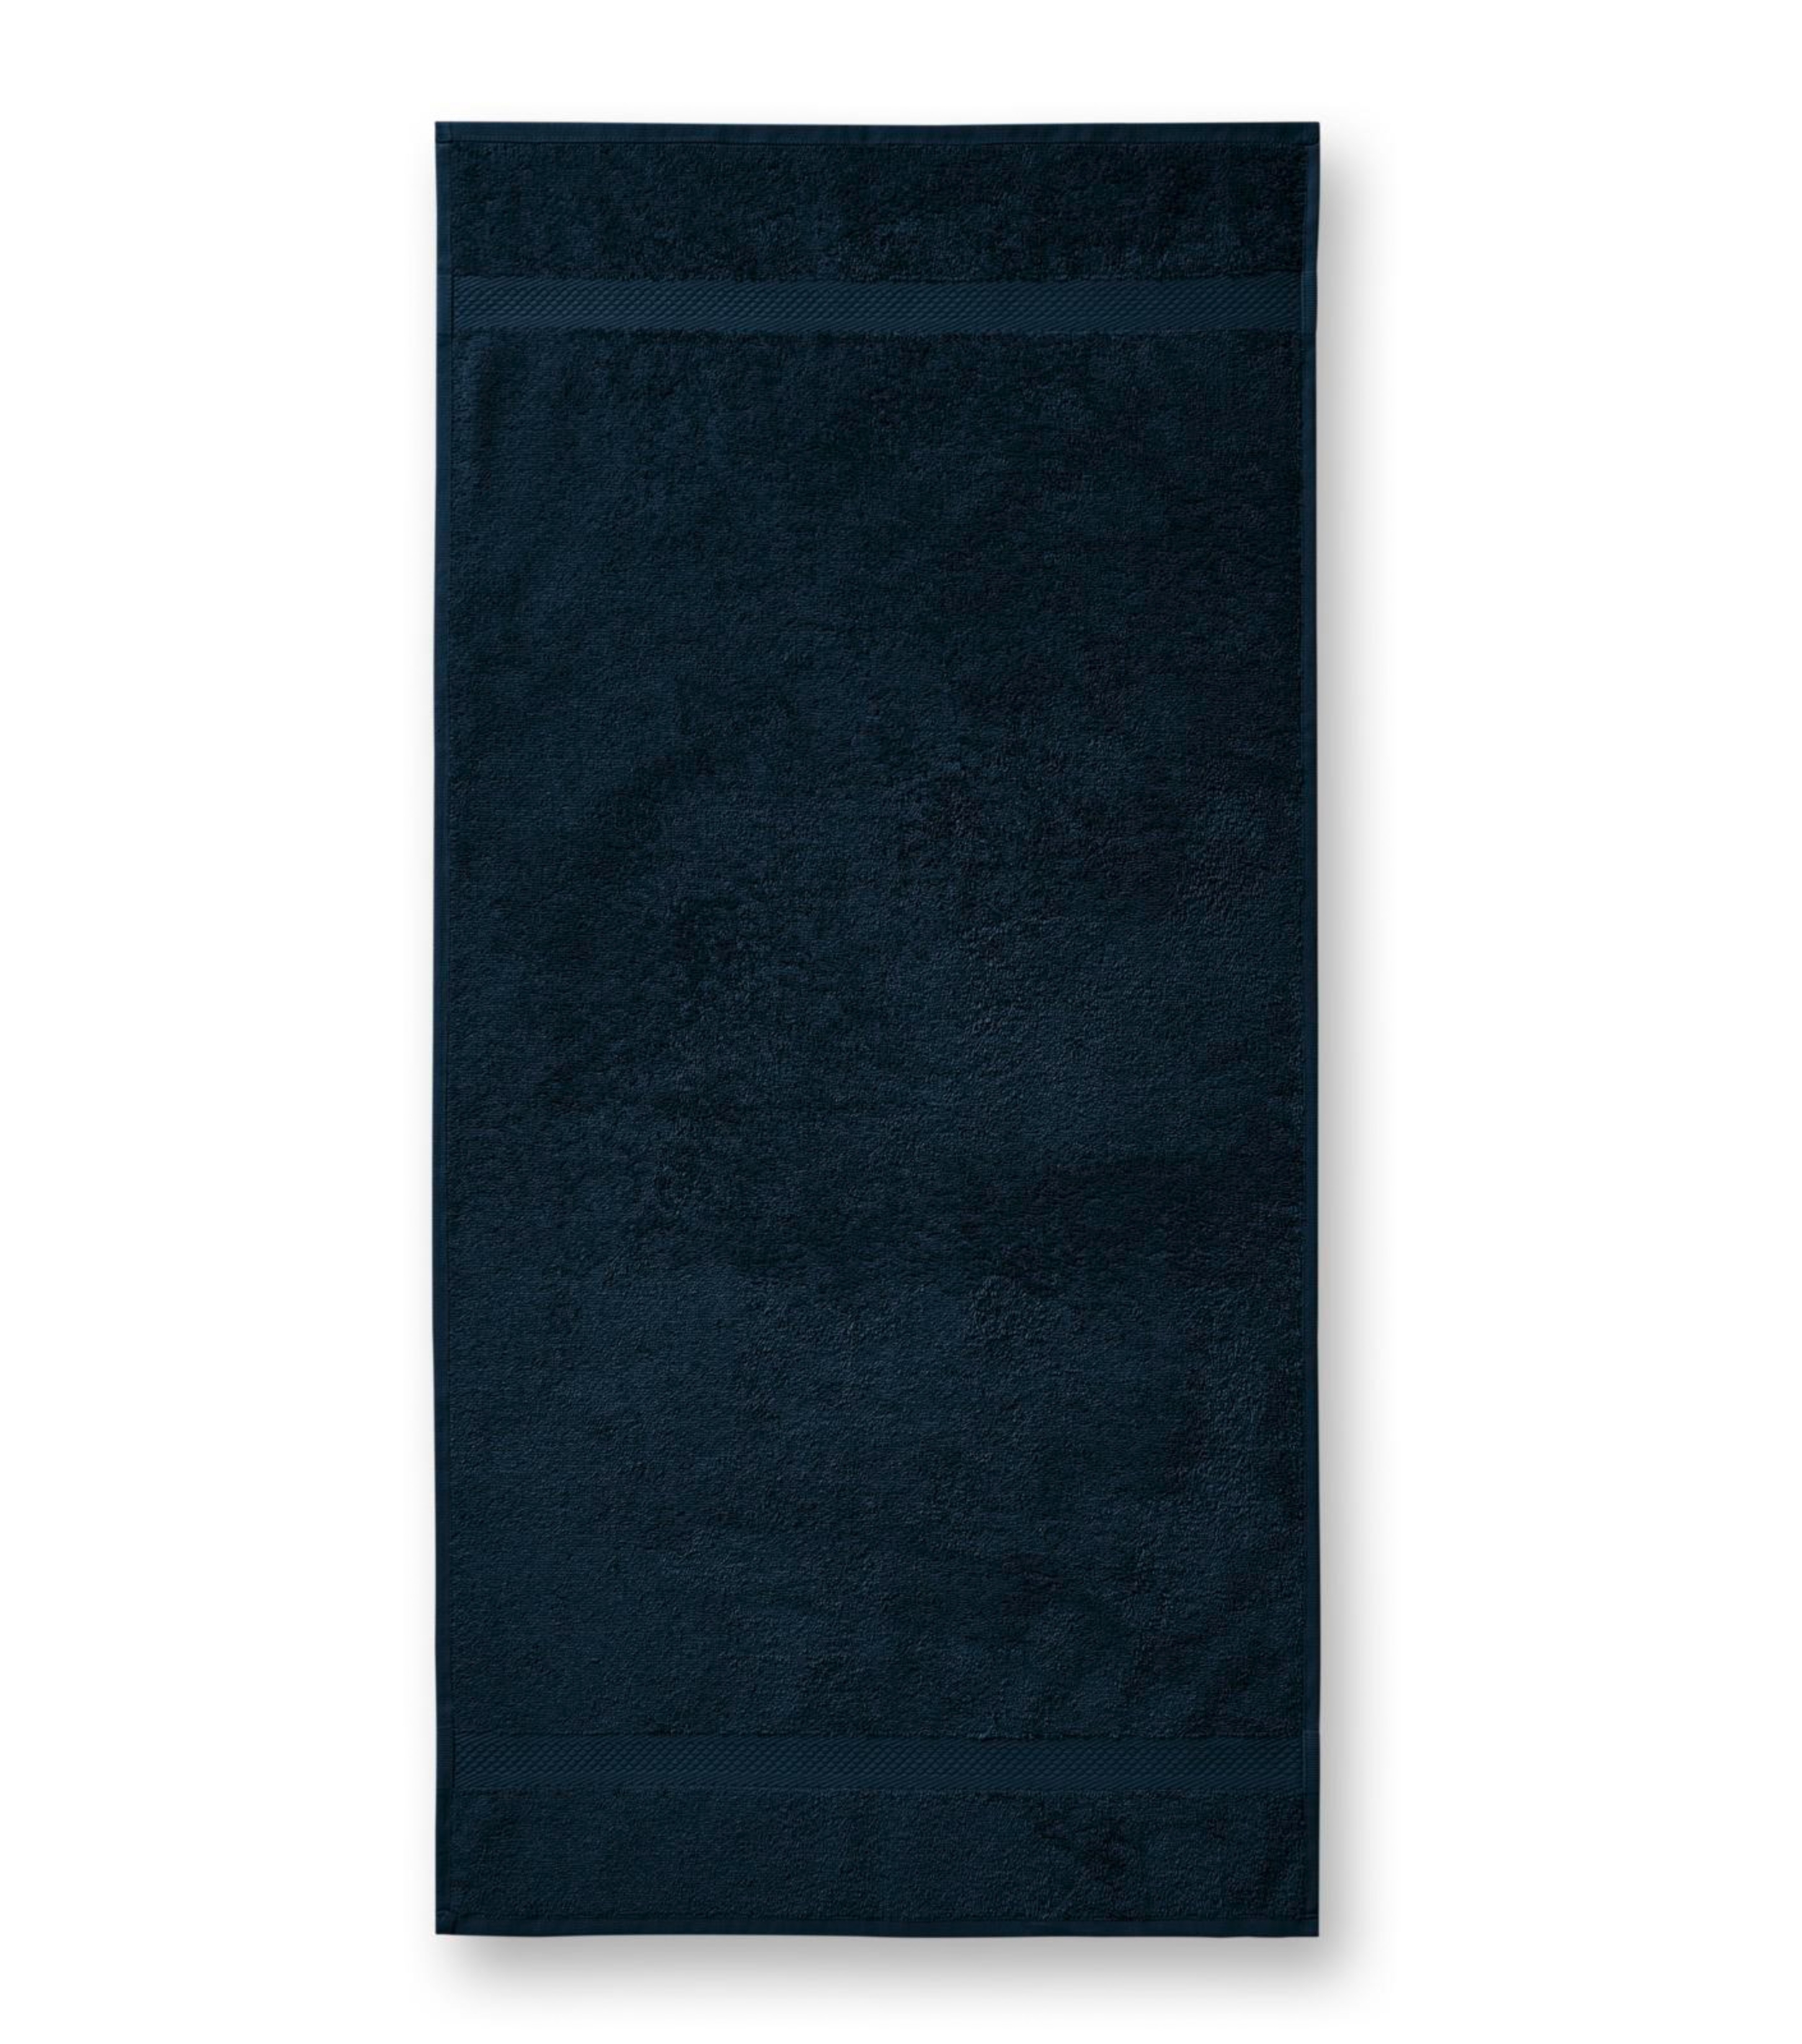 Terry Towel 903 Handtuch unisex